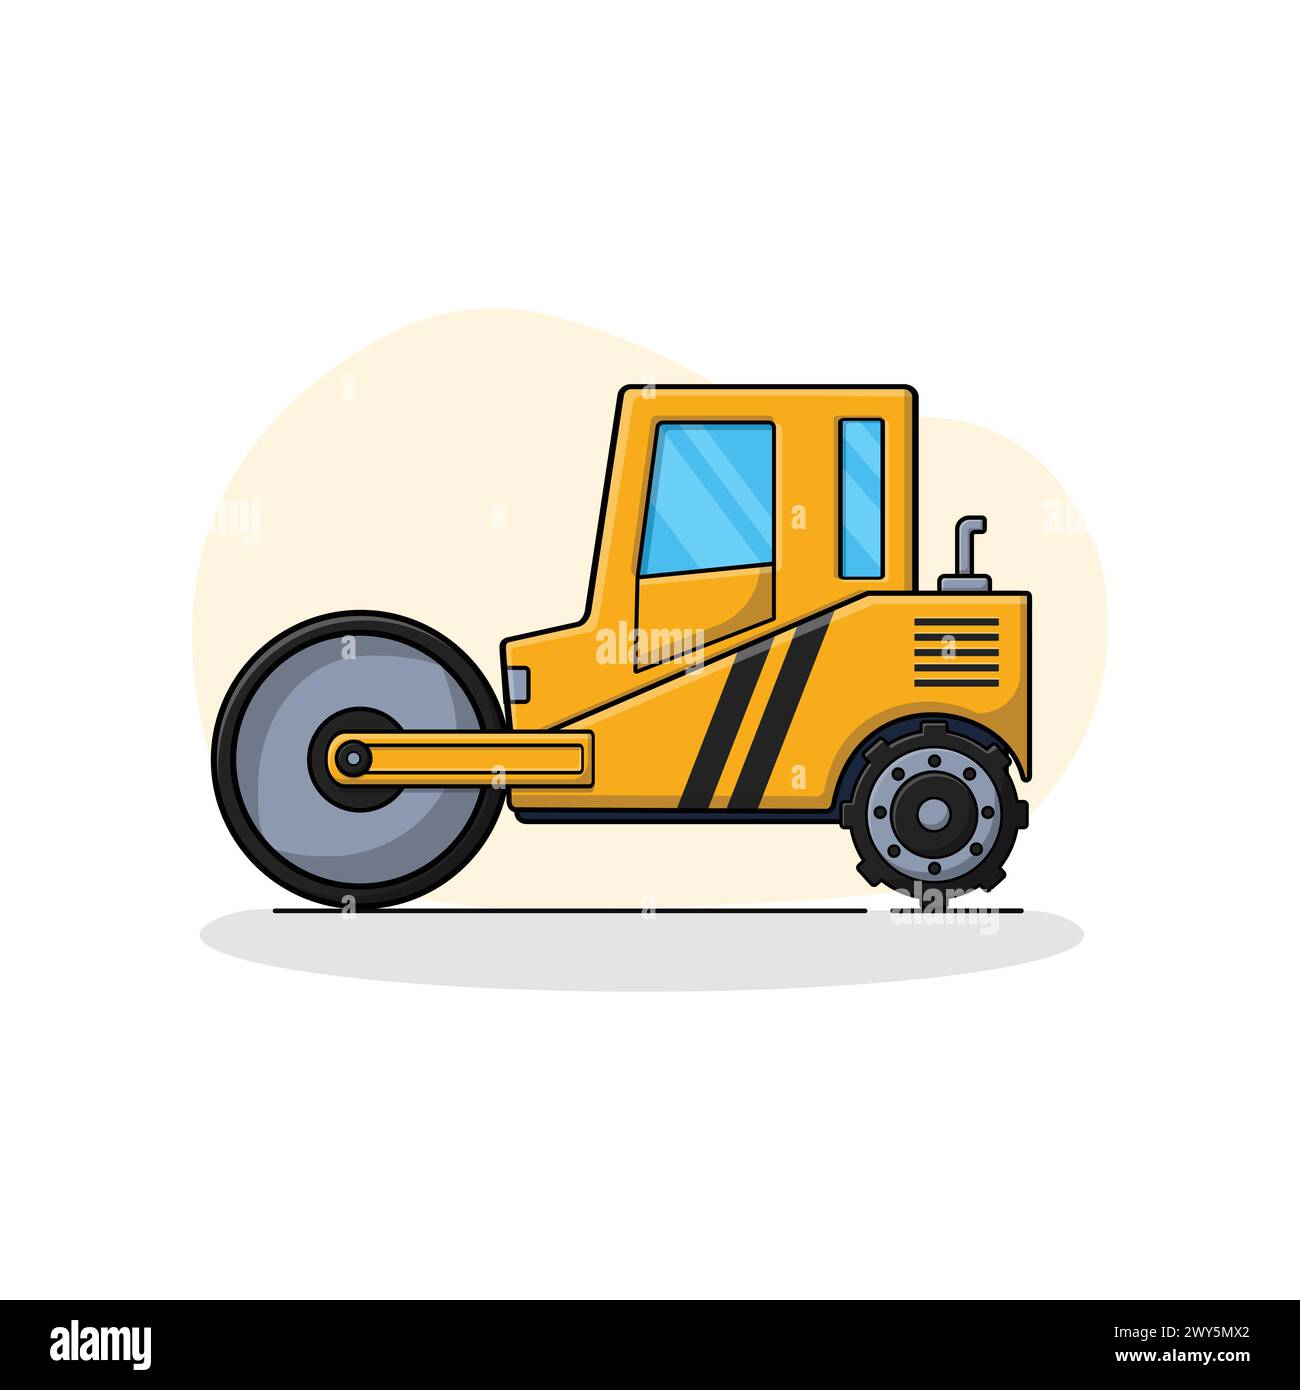 Yellow Road Roller Vector Illustration. Construction Equipment Concept Stock Vector